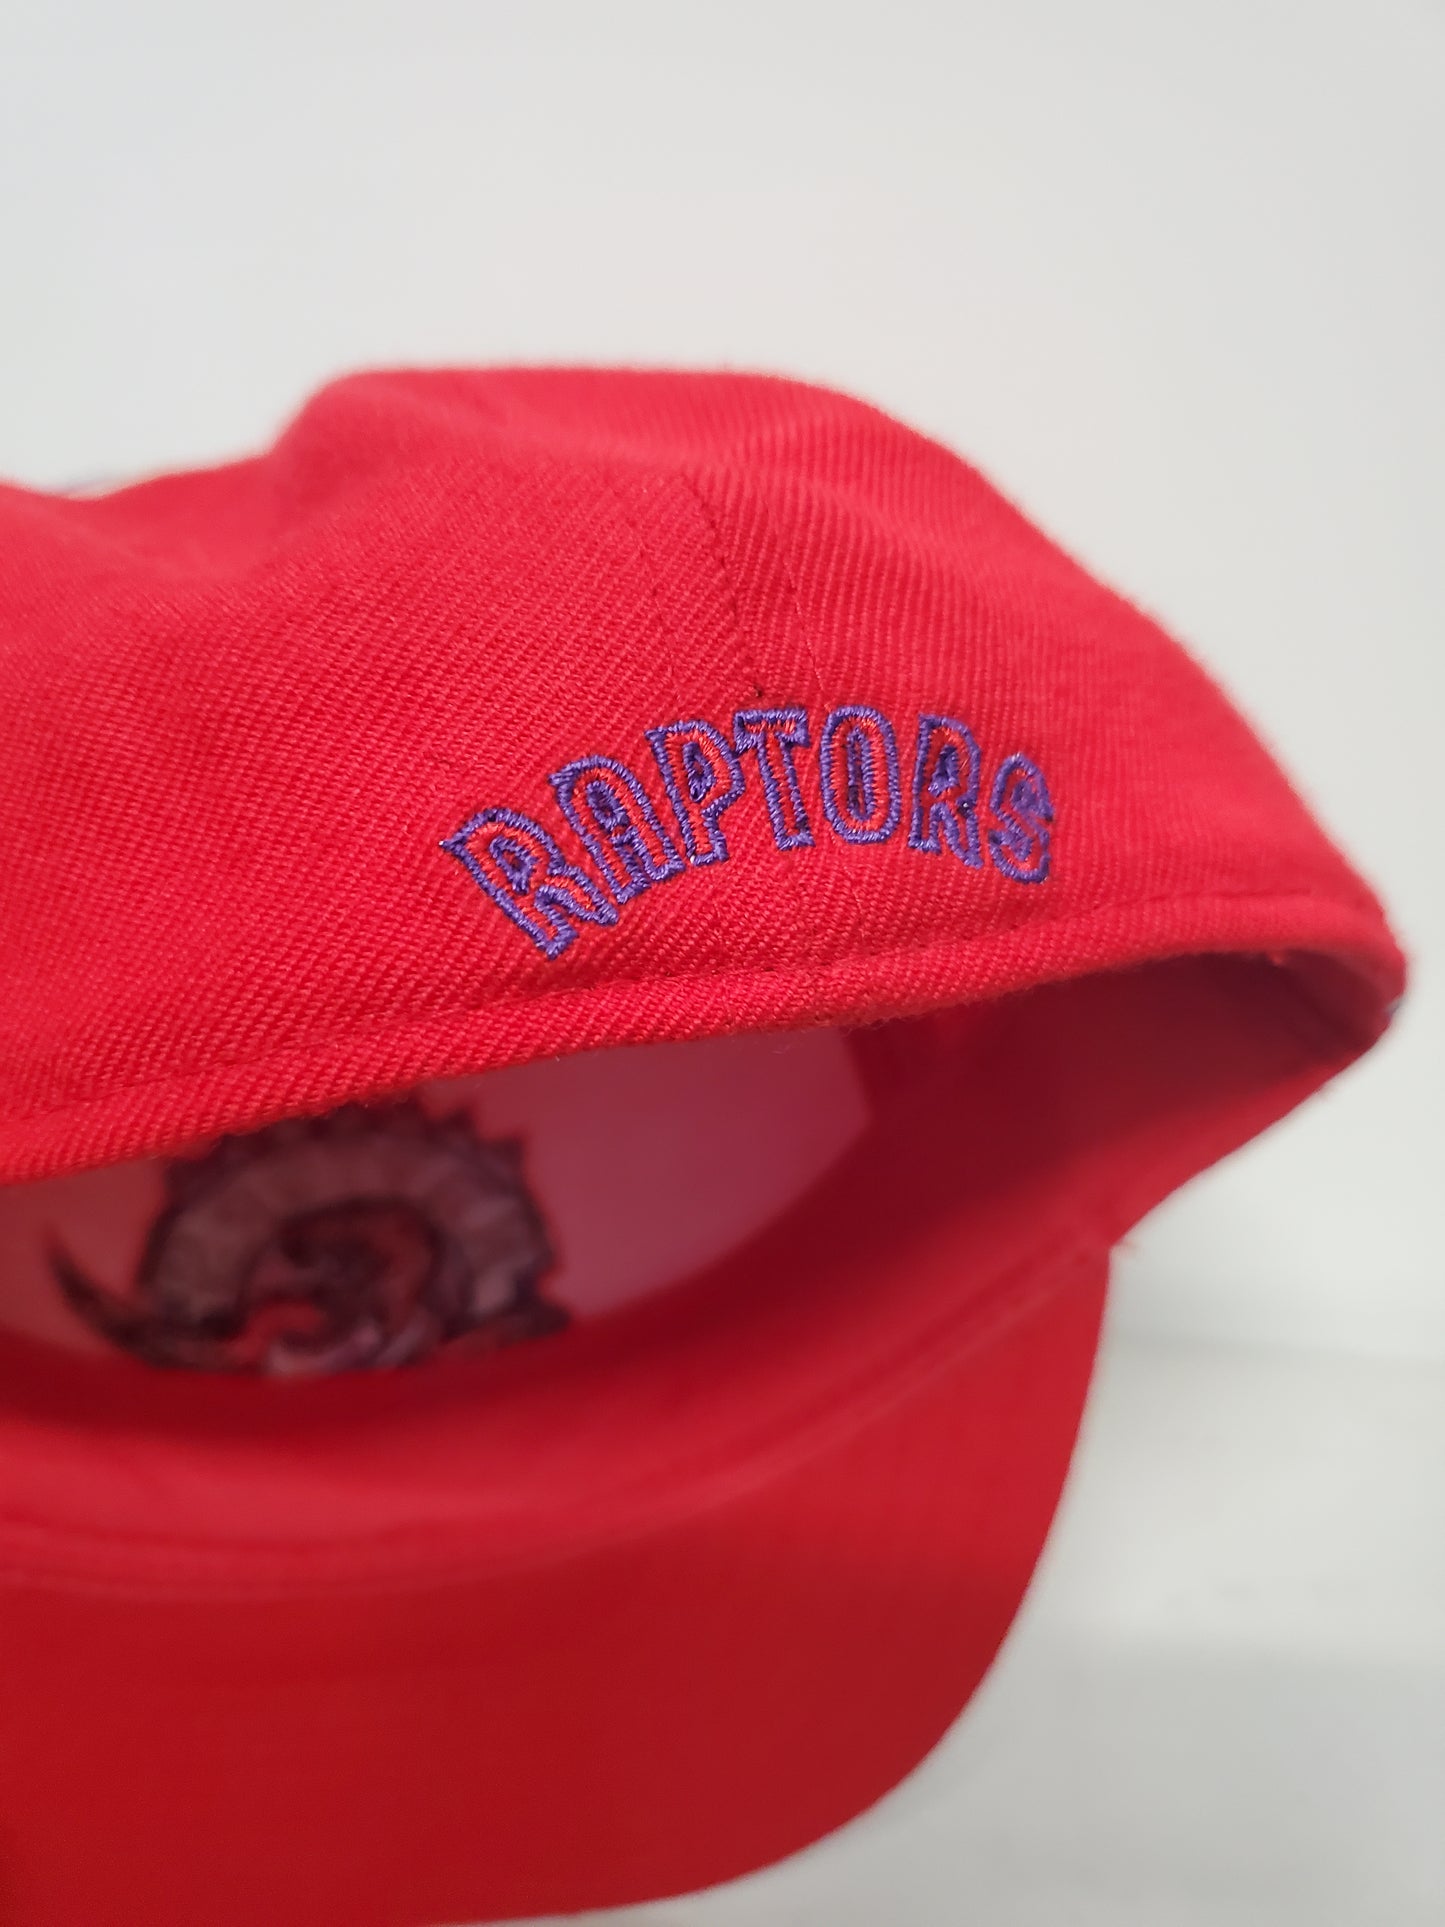 Mens Vintage Toronto Raptors Reebok Fitted Size 7 1/8